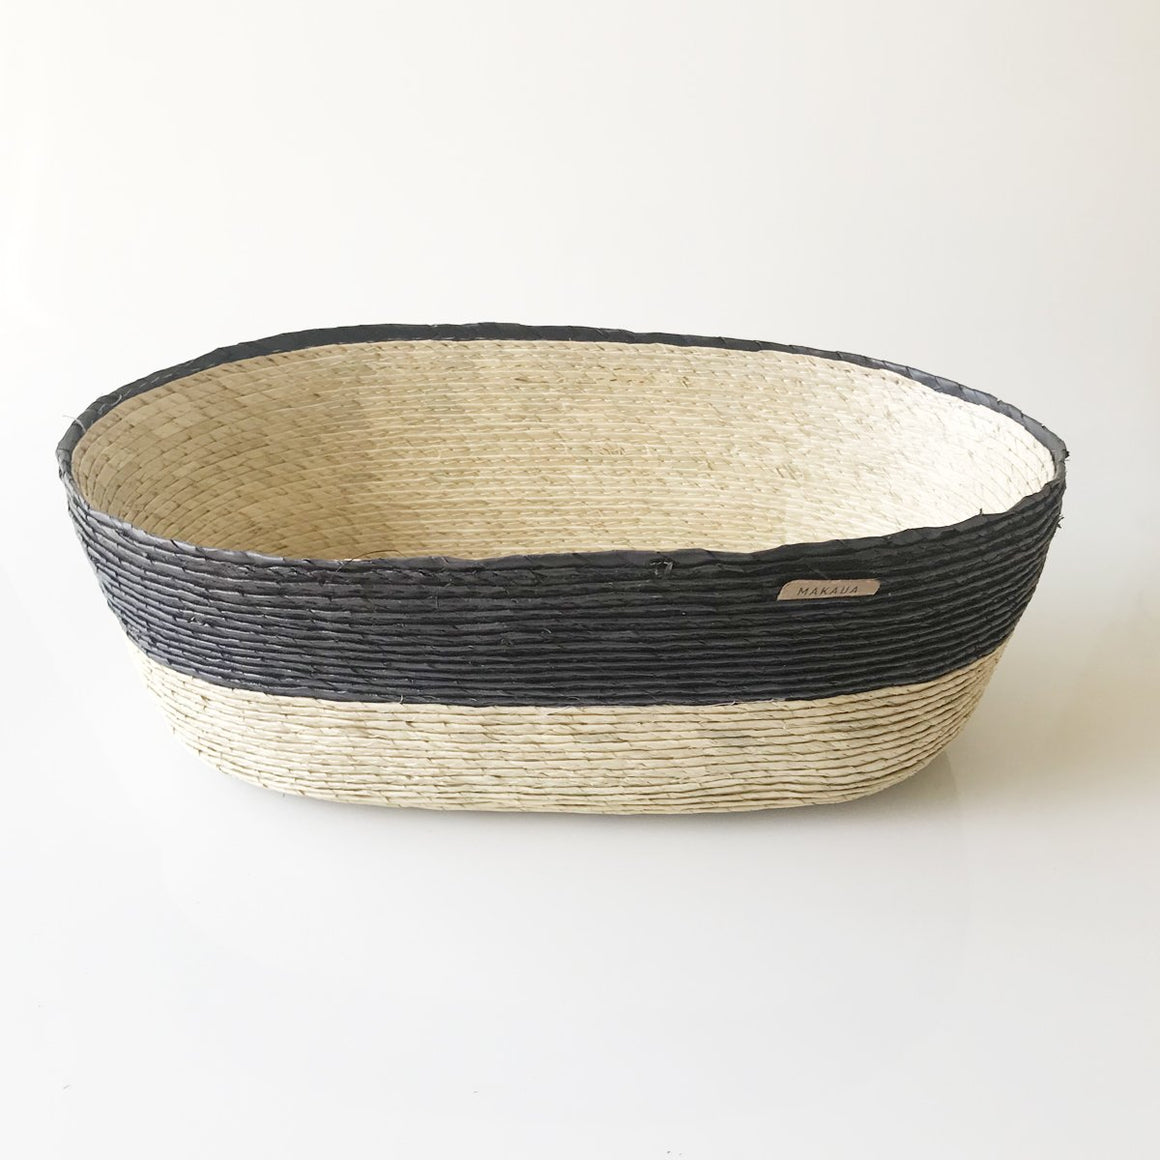 Small Oval Palm Basket - Black Stripe